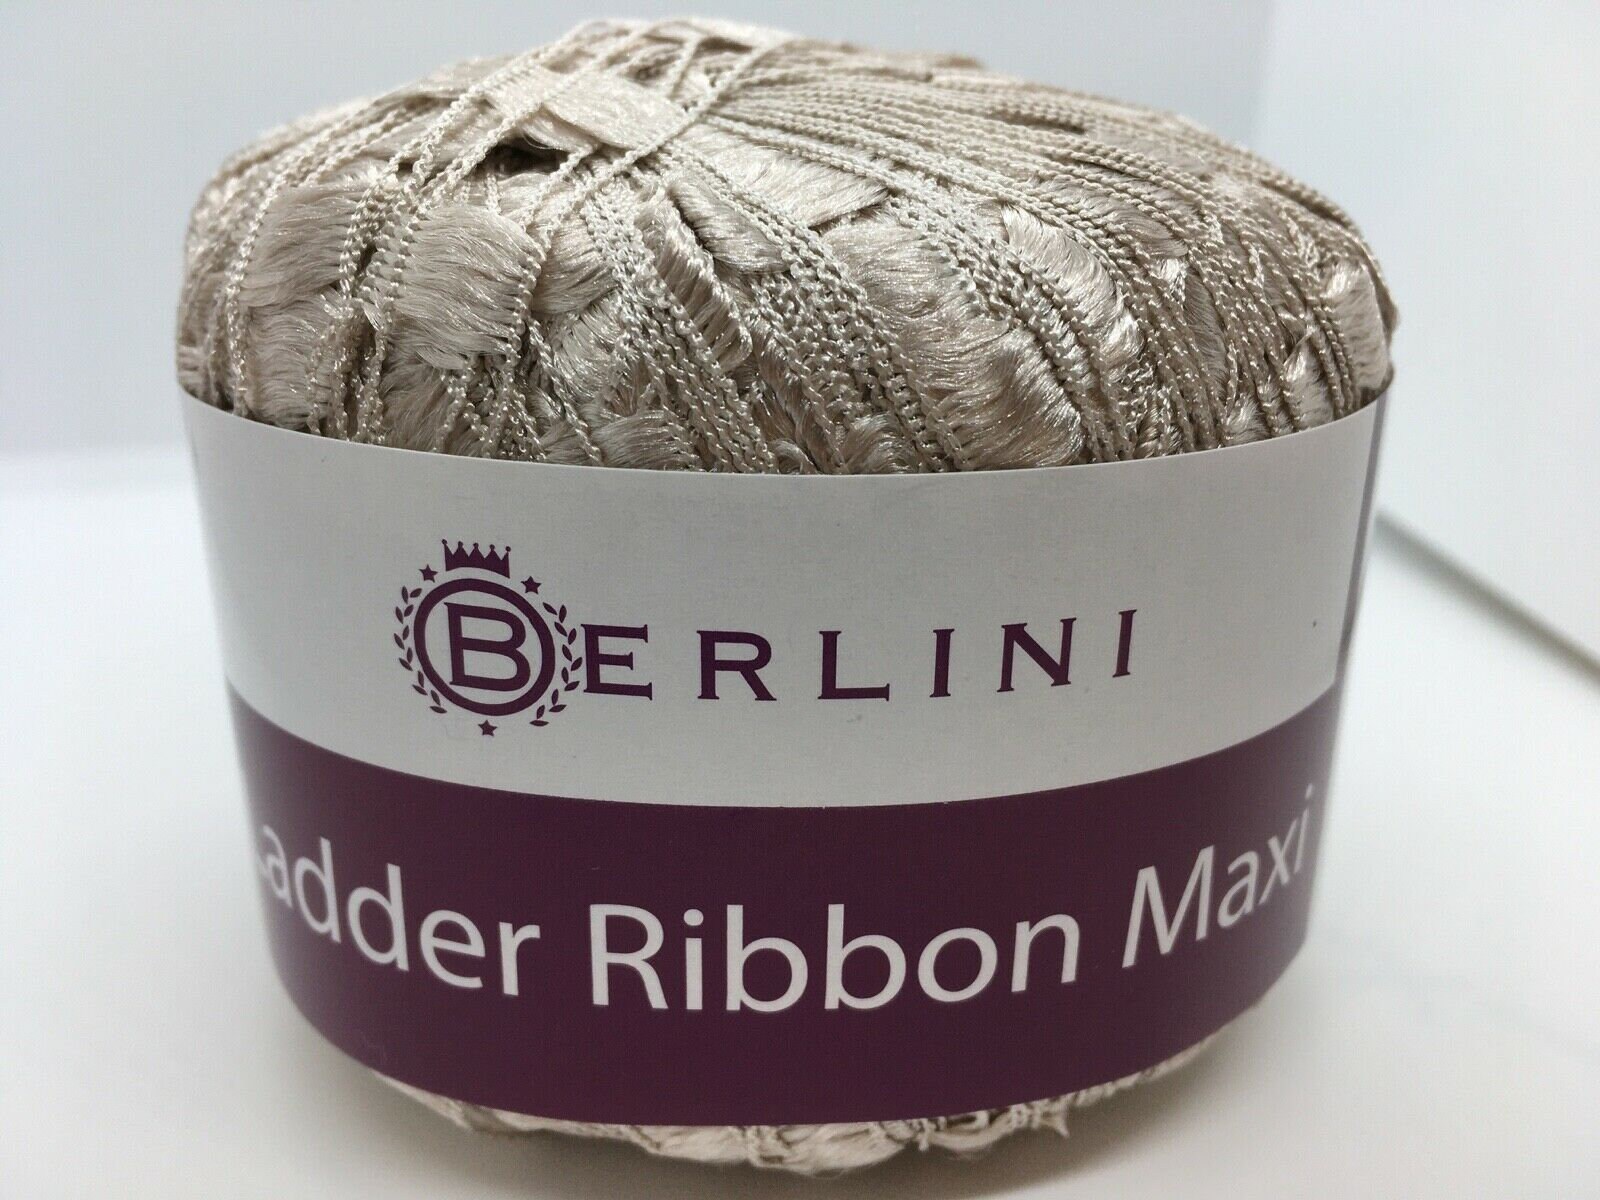 Berlini Ladder Ribbon Yarn - 50 Grams (1.75 Ounces), 142 Yards - #97  Kensington - Orchid, Blue, Teal, Bronze